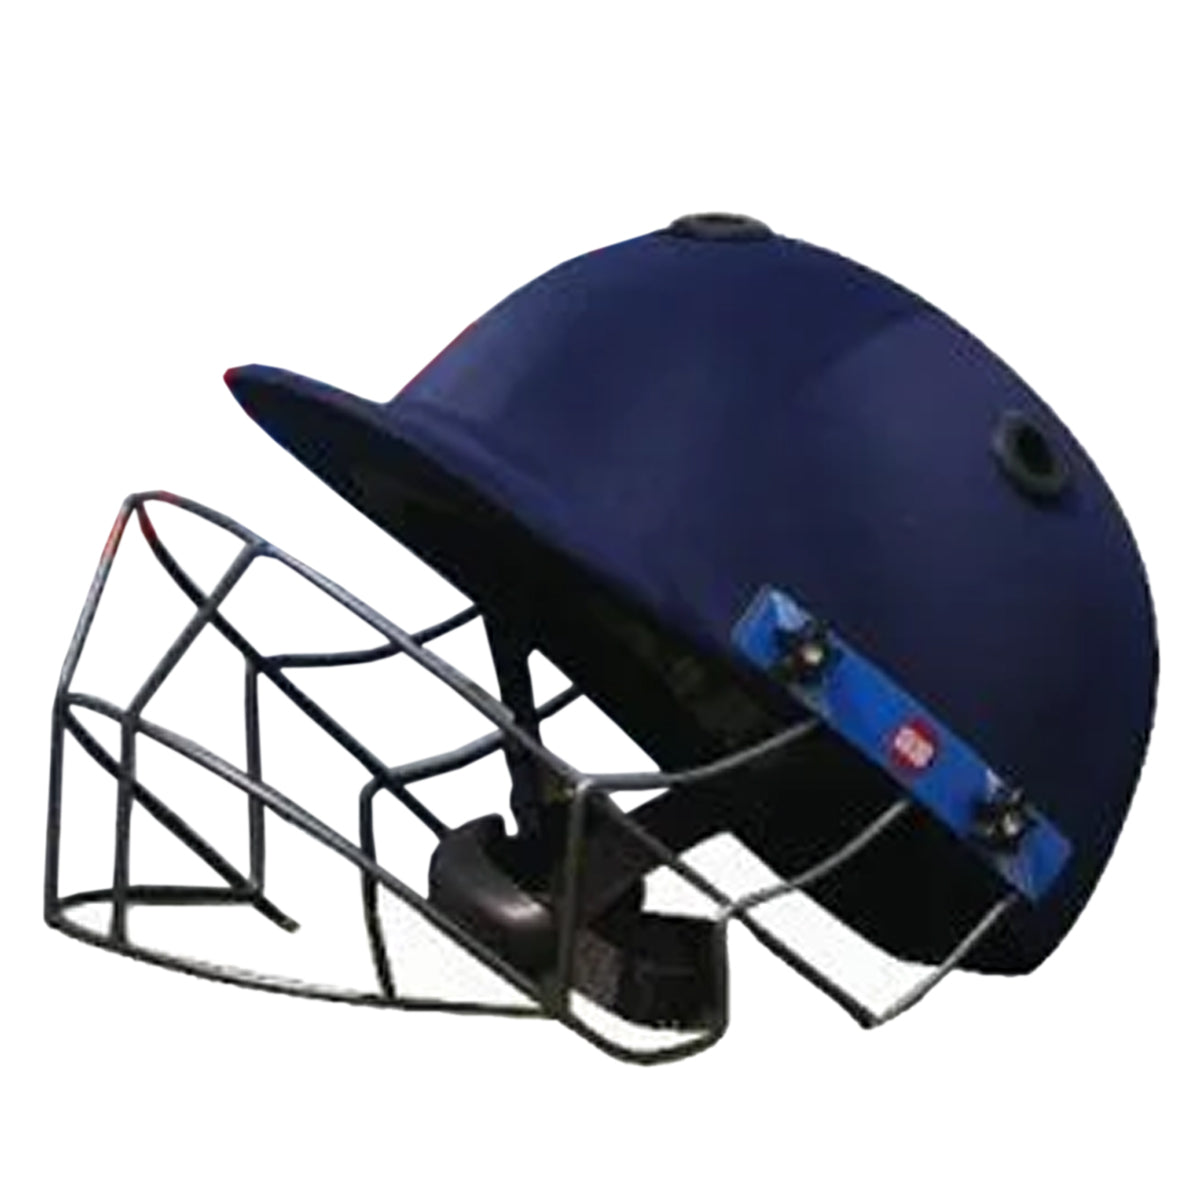 SS Ravindra Jadeja Kashmir Willow Full Cricket Kit With Helmet - Best Price online Prokicksports.com